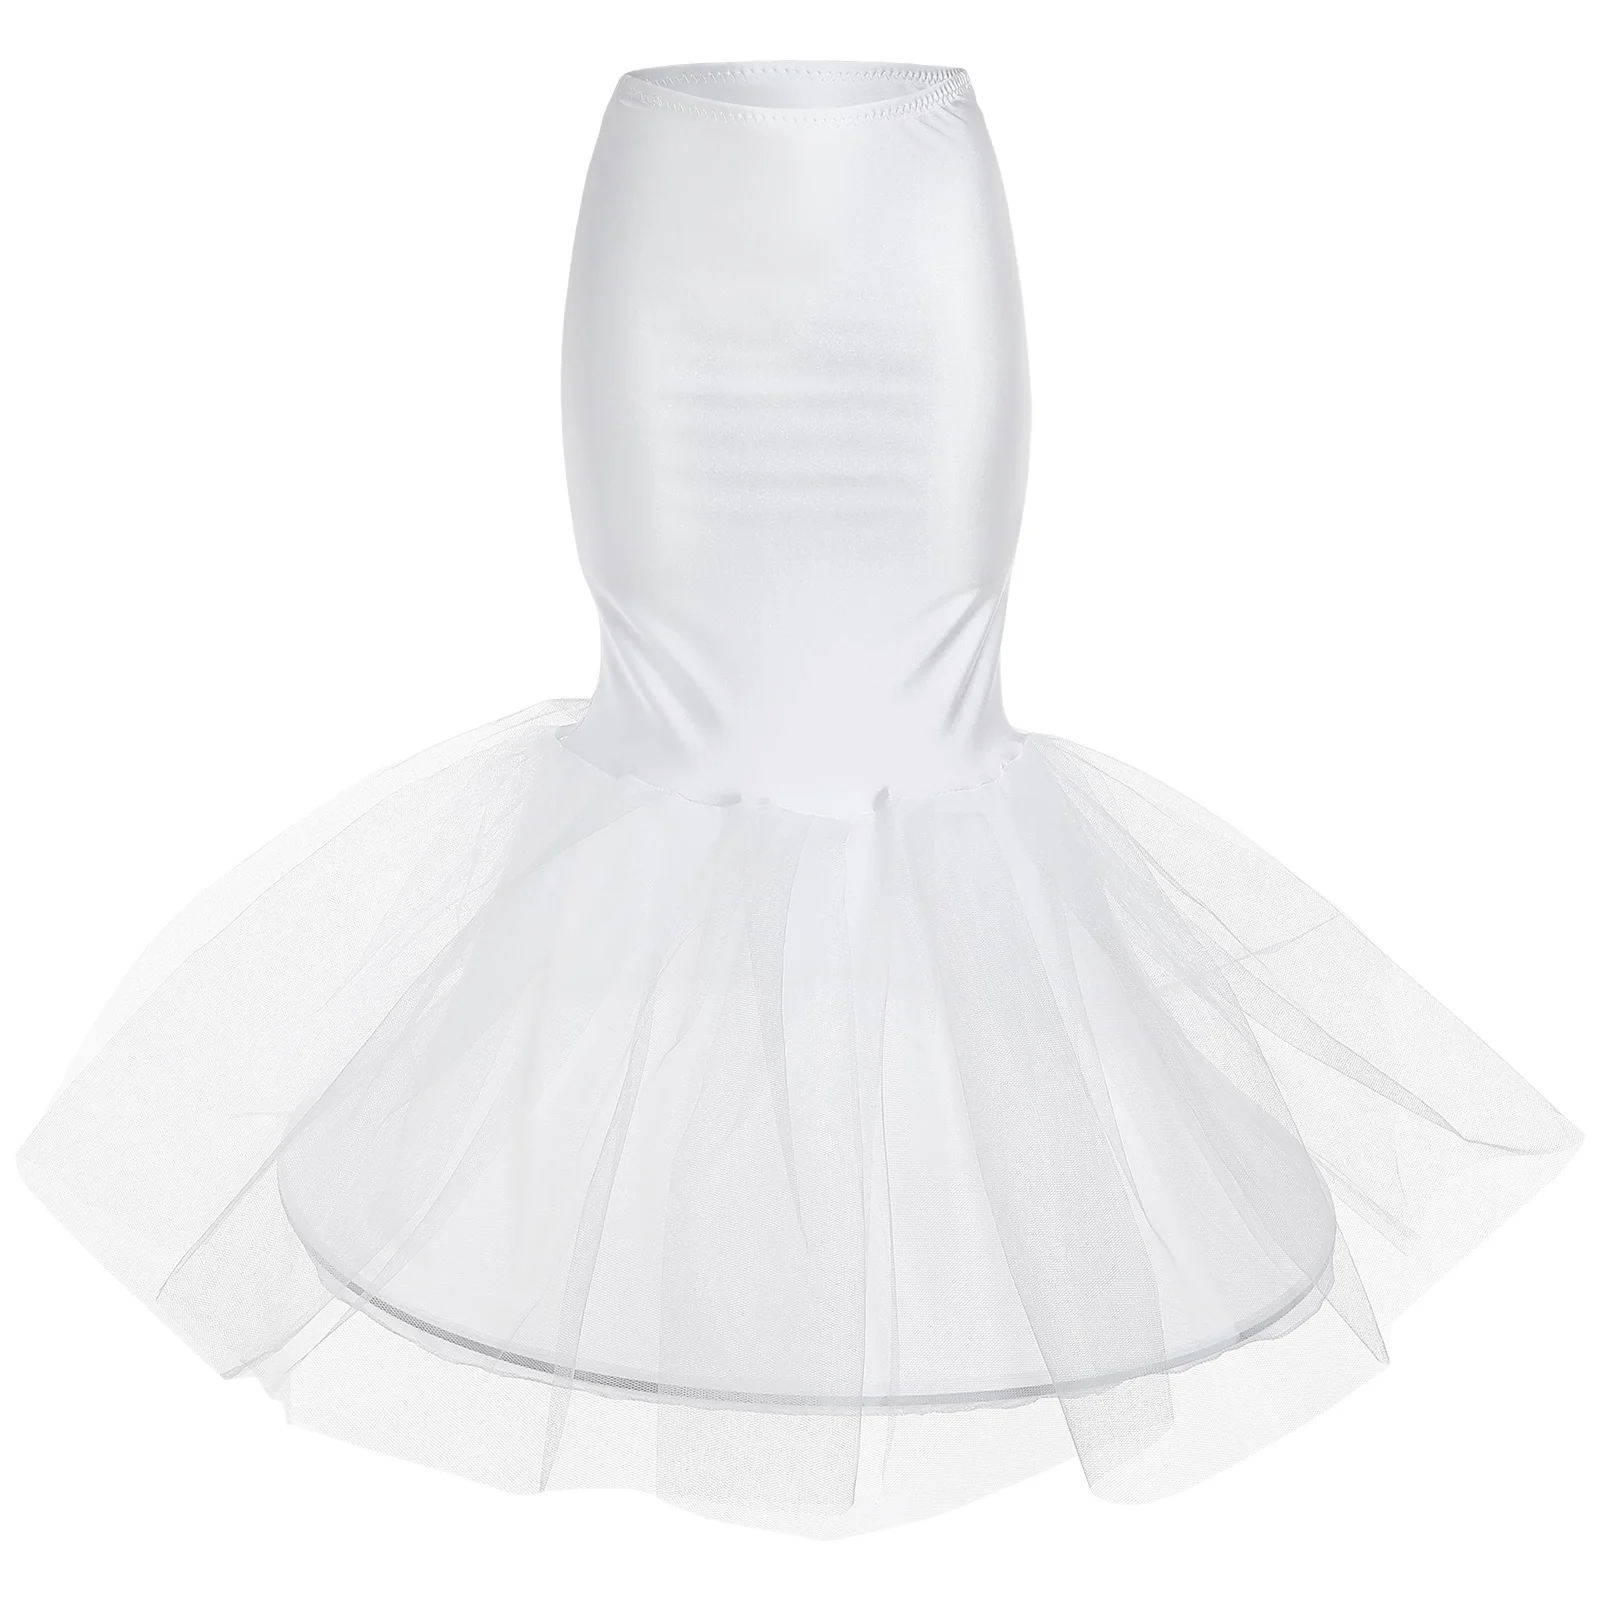 

Fashion Fishtail Lady Waist Bag Hip White Underskirt Bride Wedding Dress Petticoat(White)